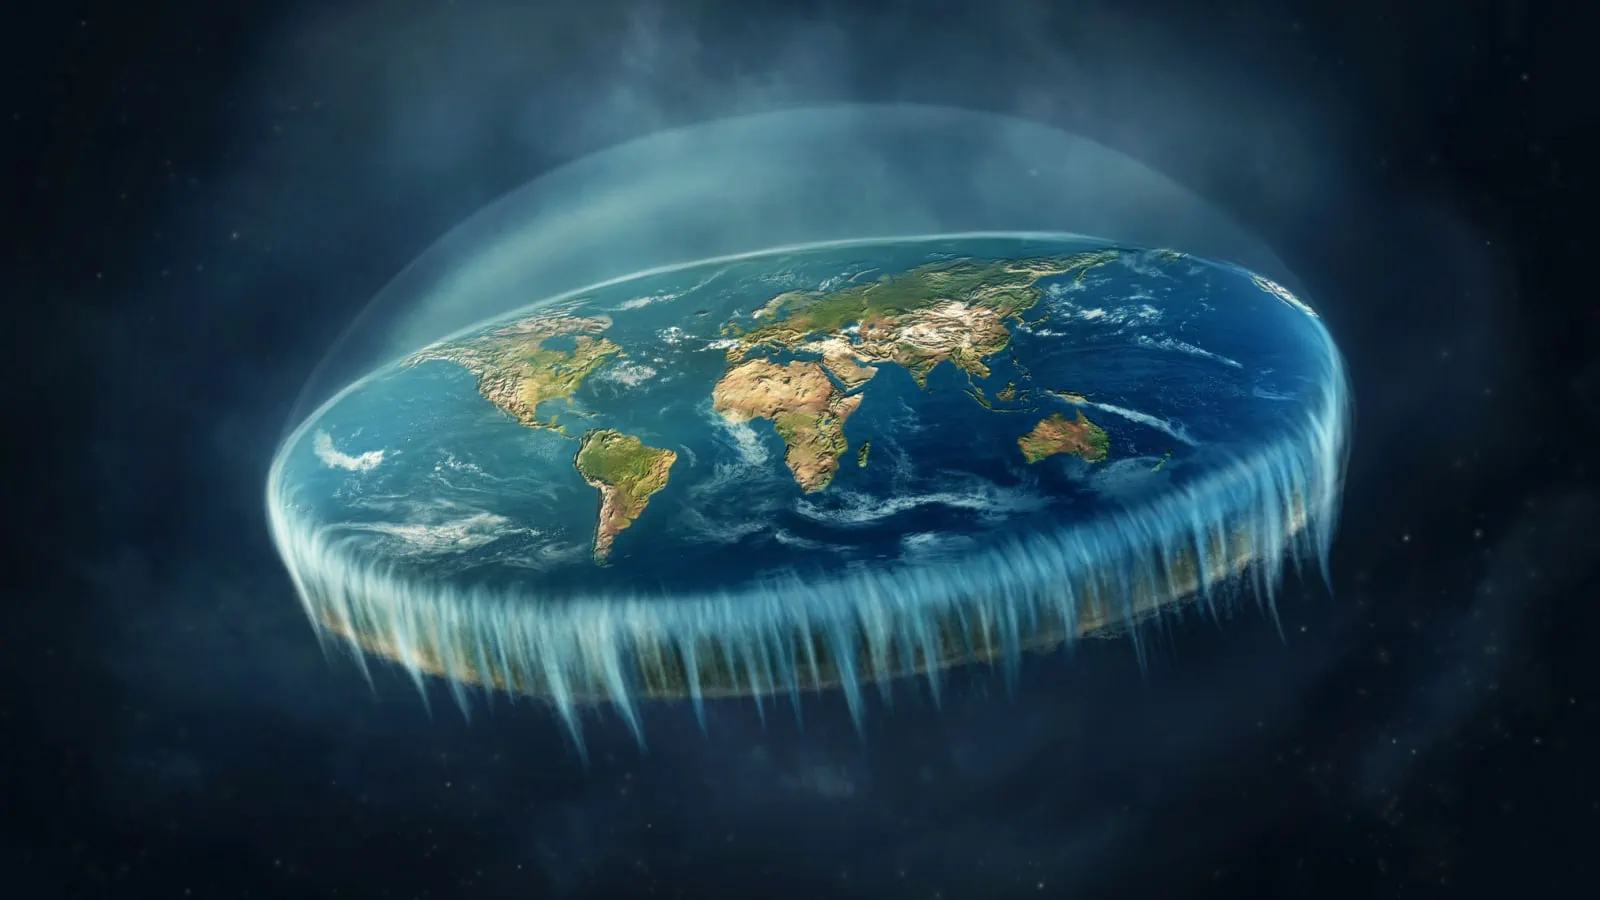 Flat Earth conspiracy